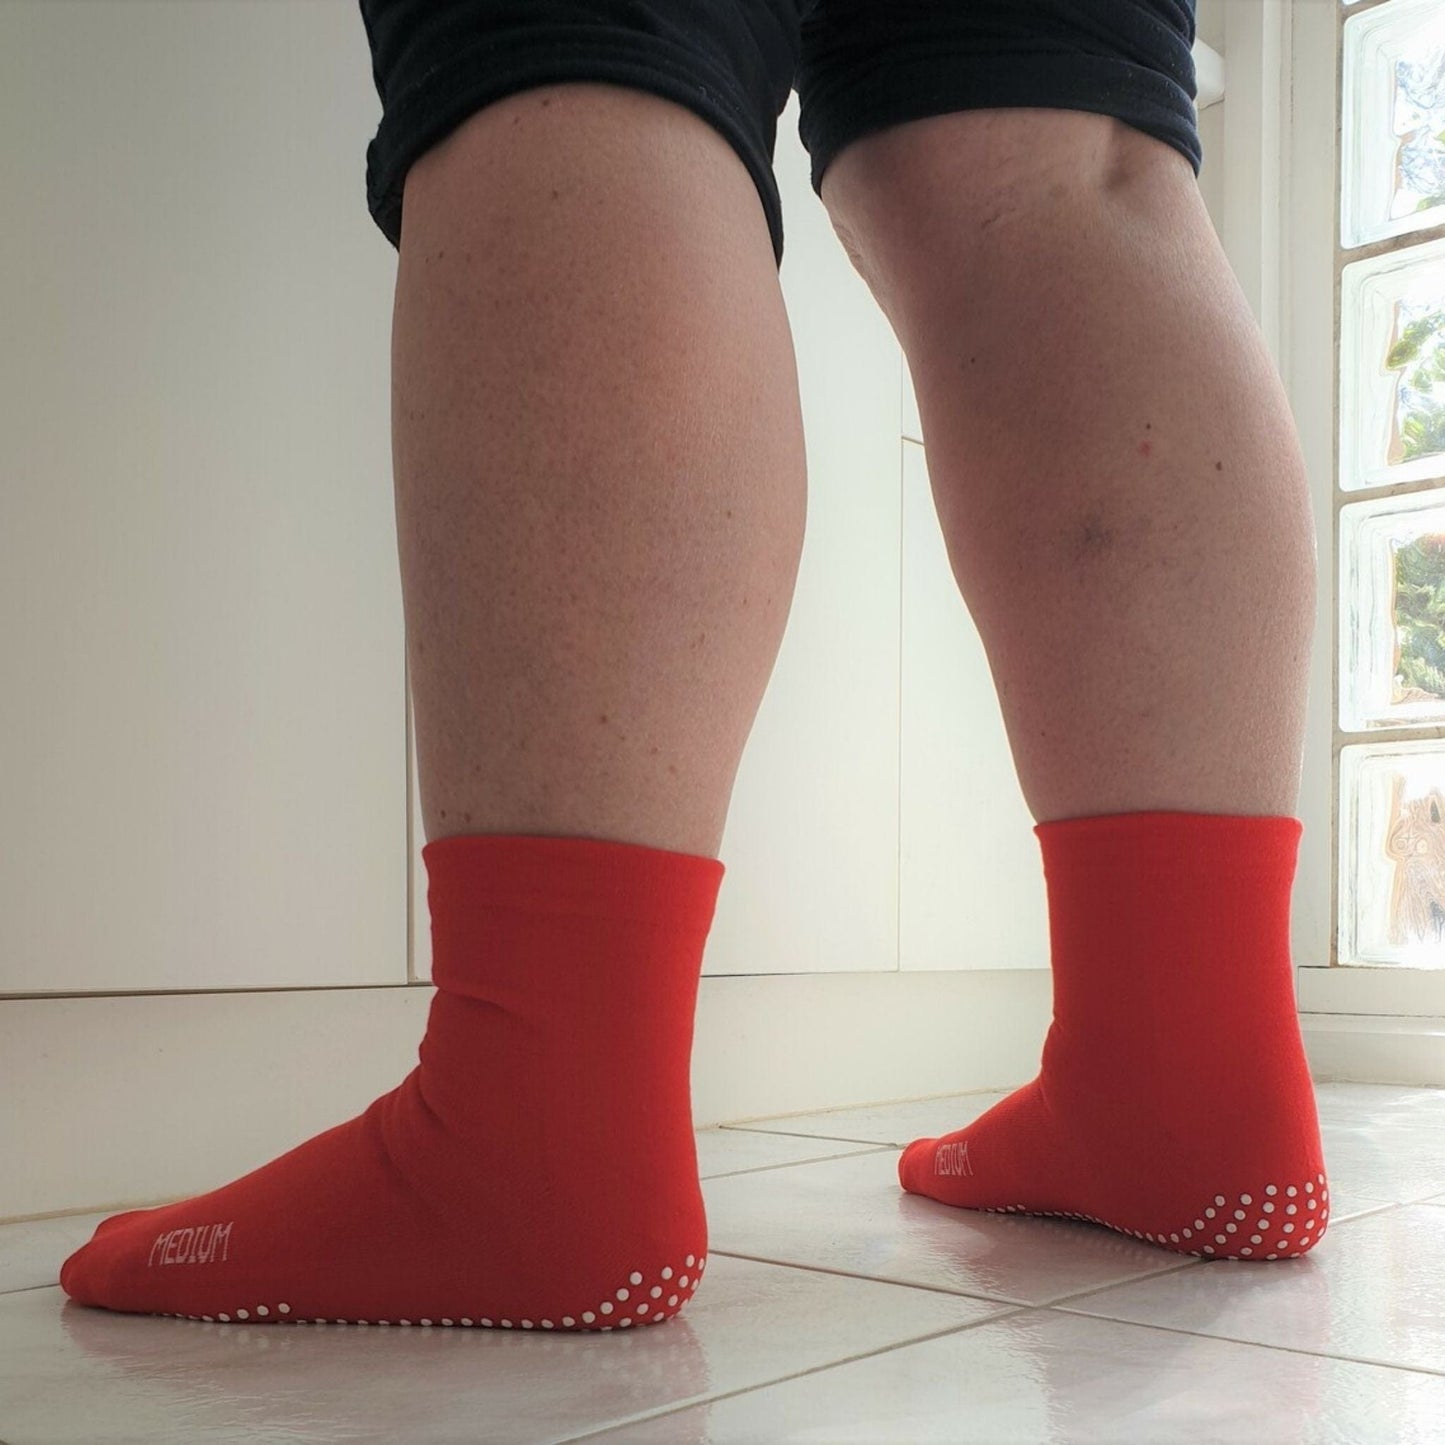 Gripperz Adult Grip Socks - Non Slip Maxi Socks - Caring Clothing